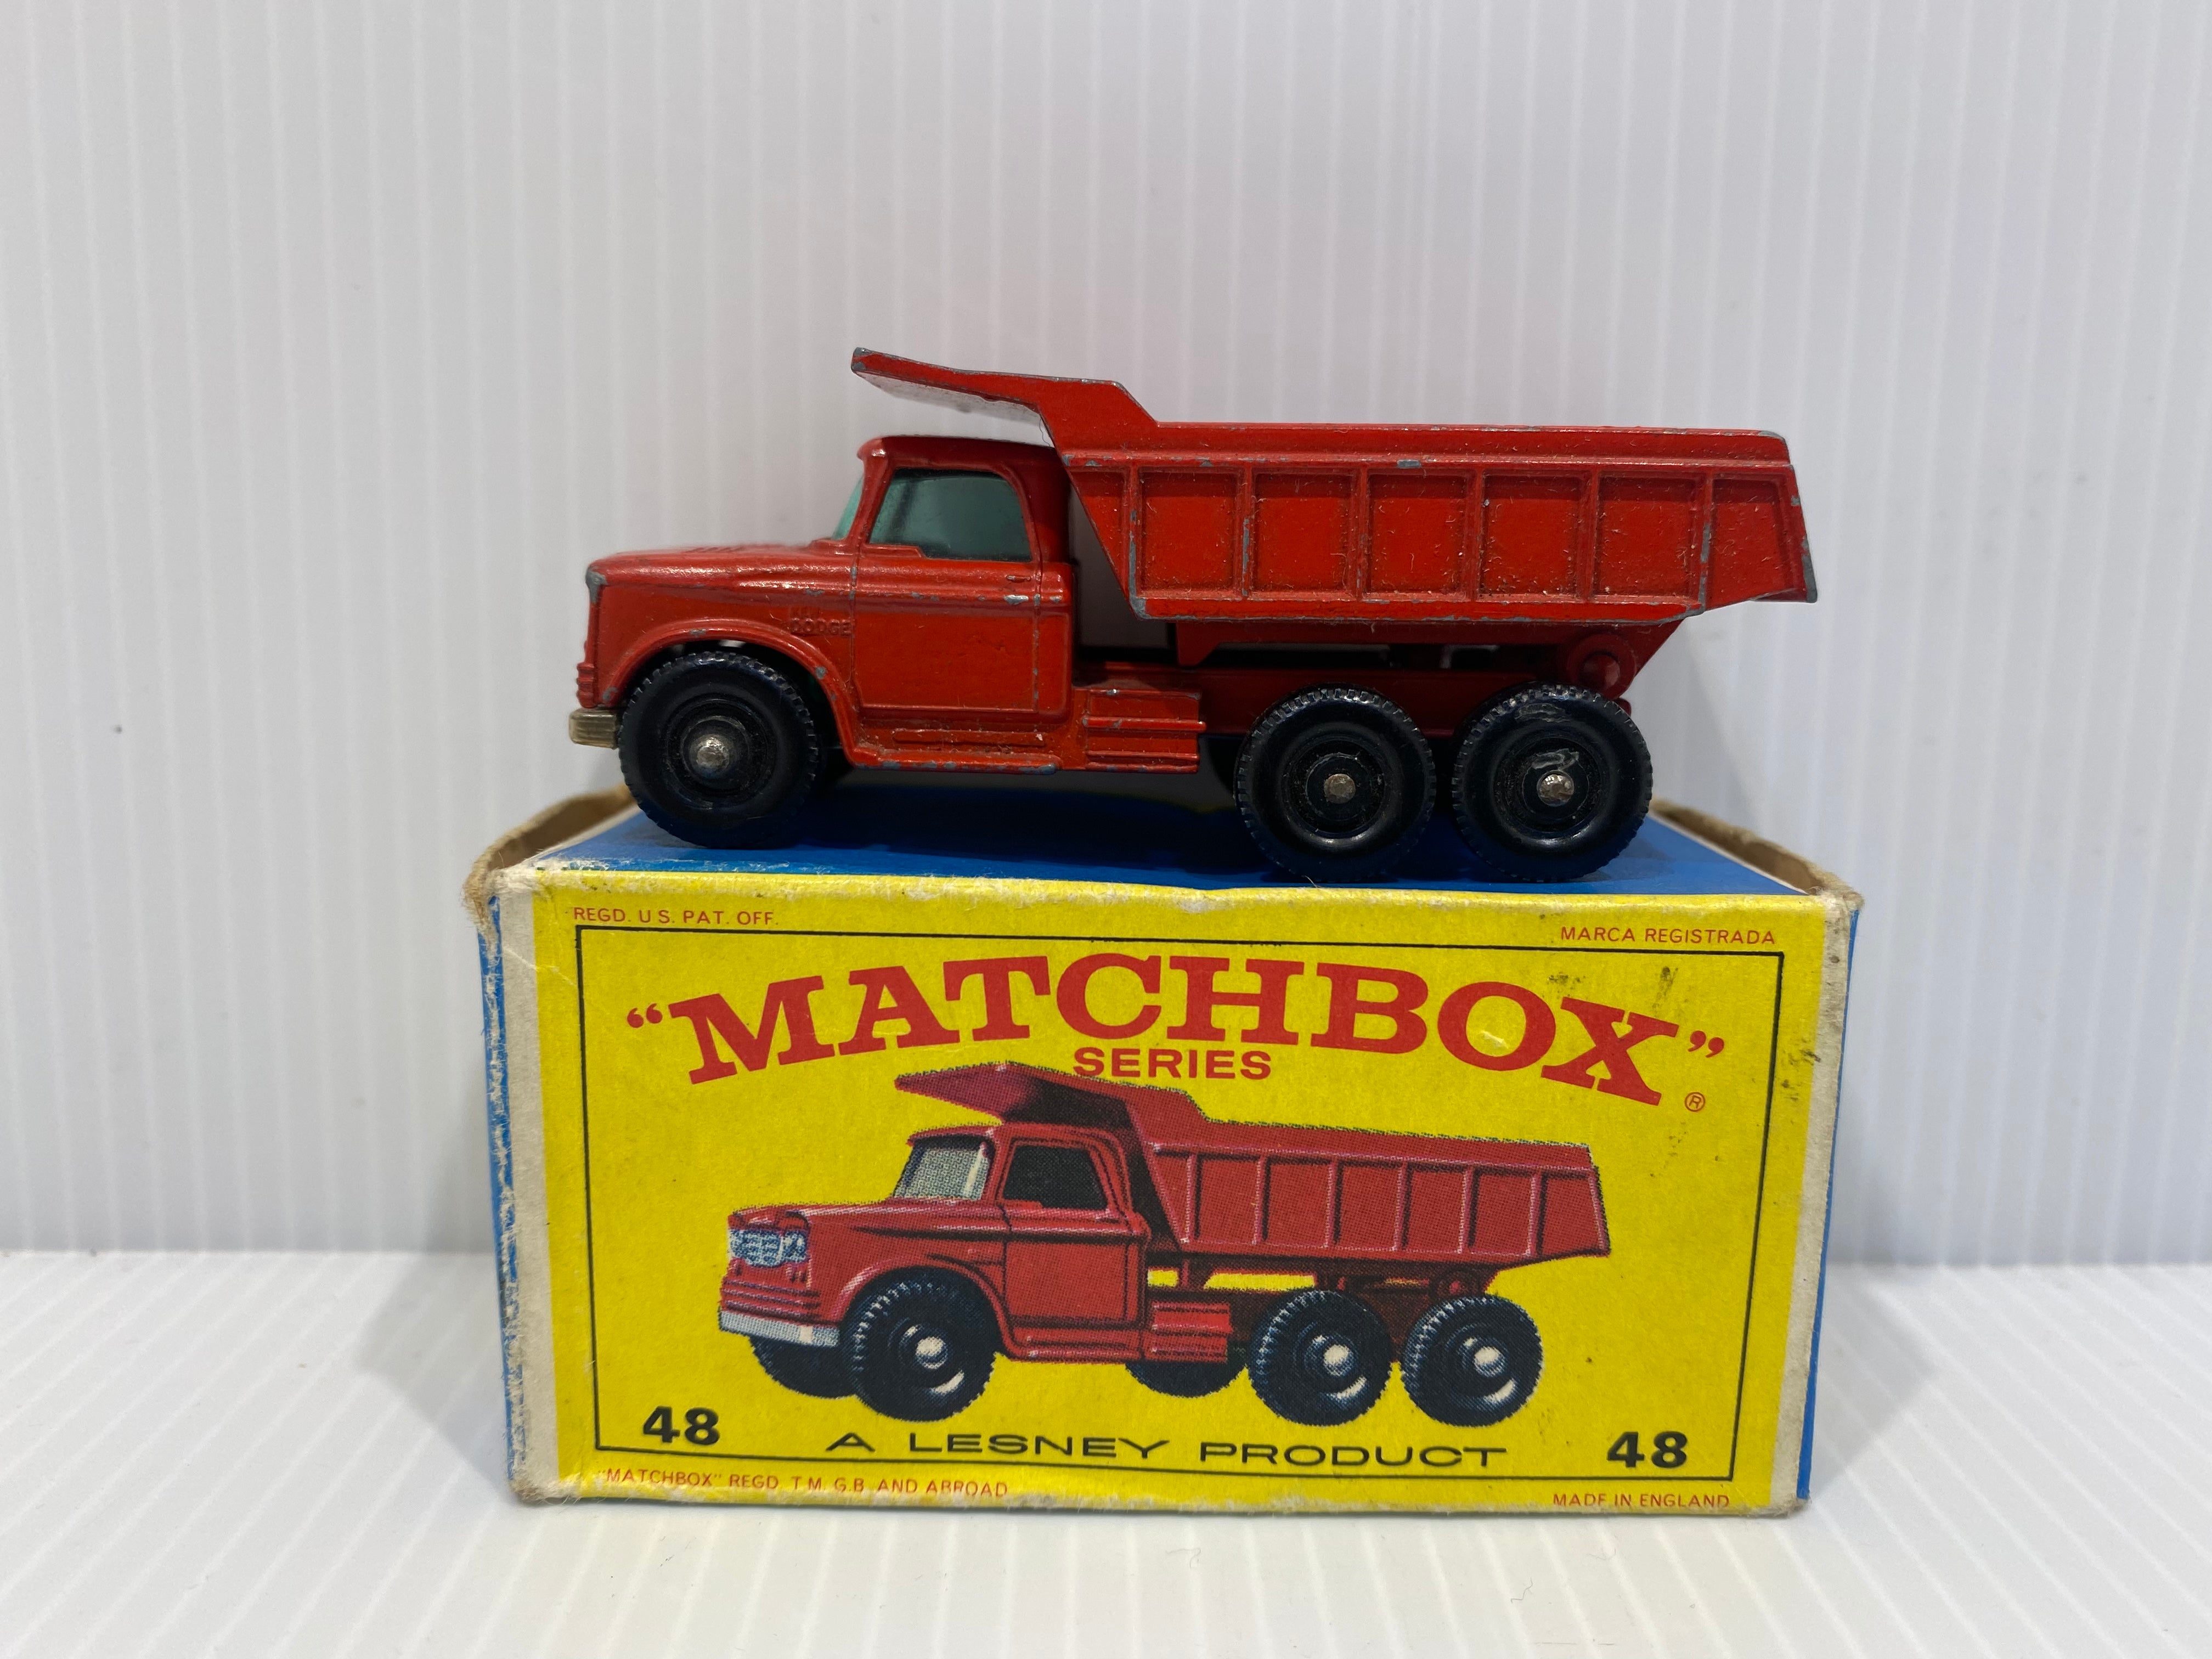 Matchbox Dodge dumper truck with original box